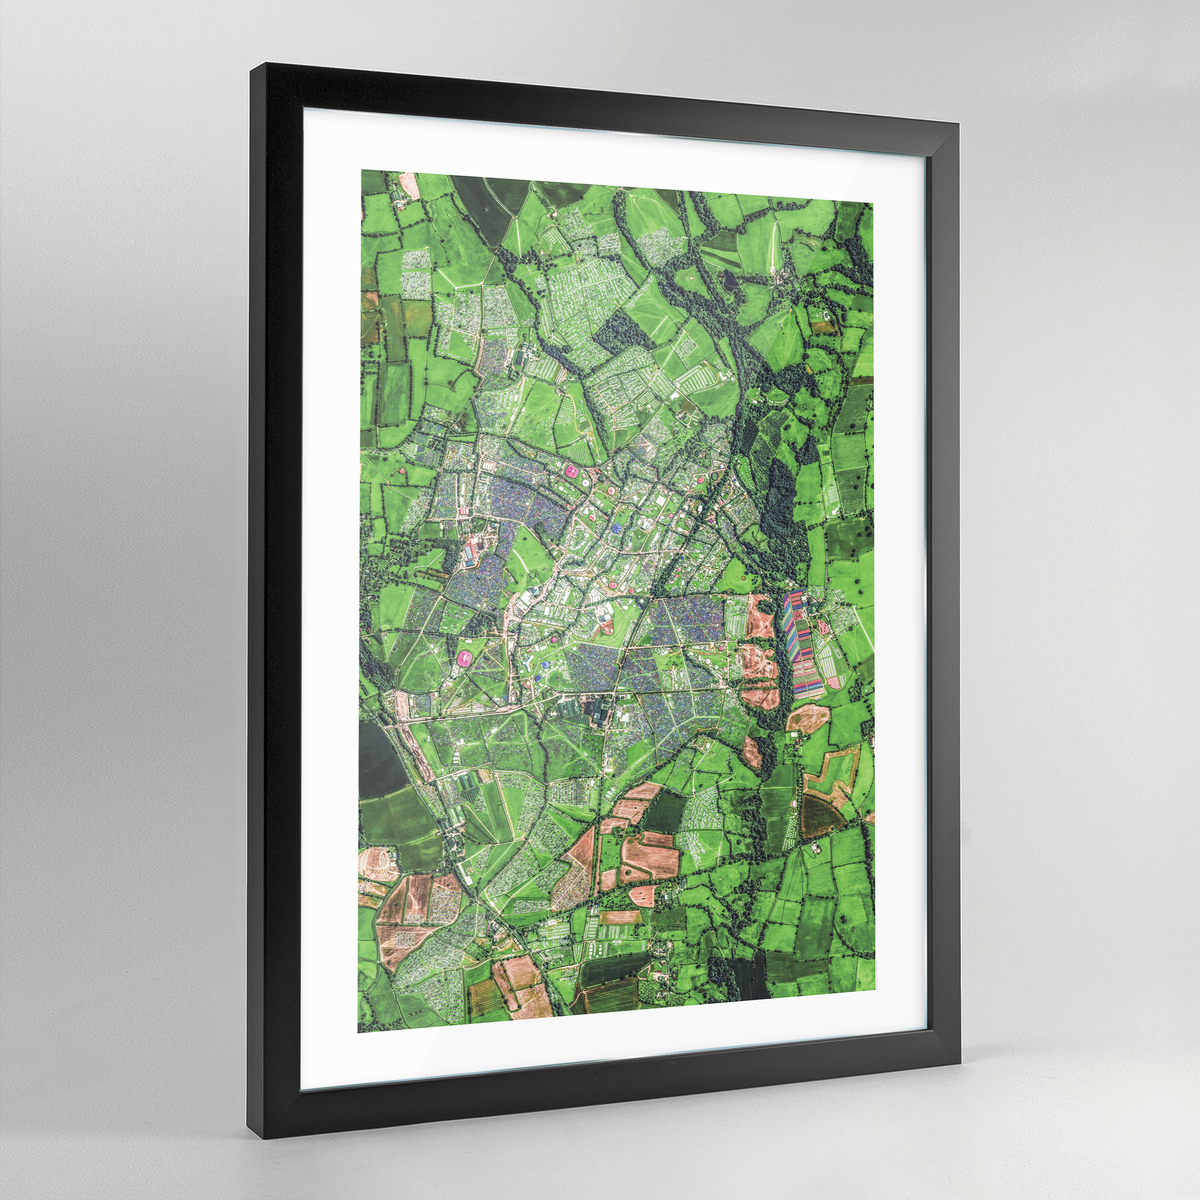 Glastonbury Earth Photography Art Print - Framed